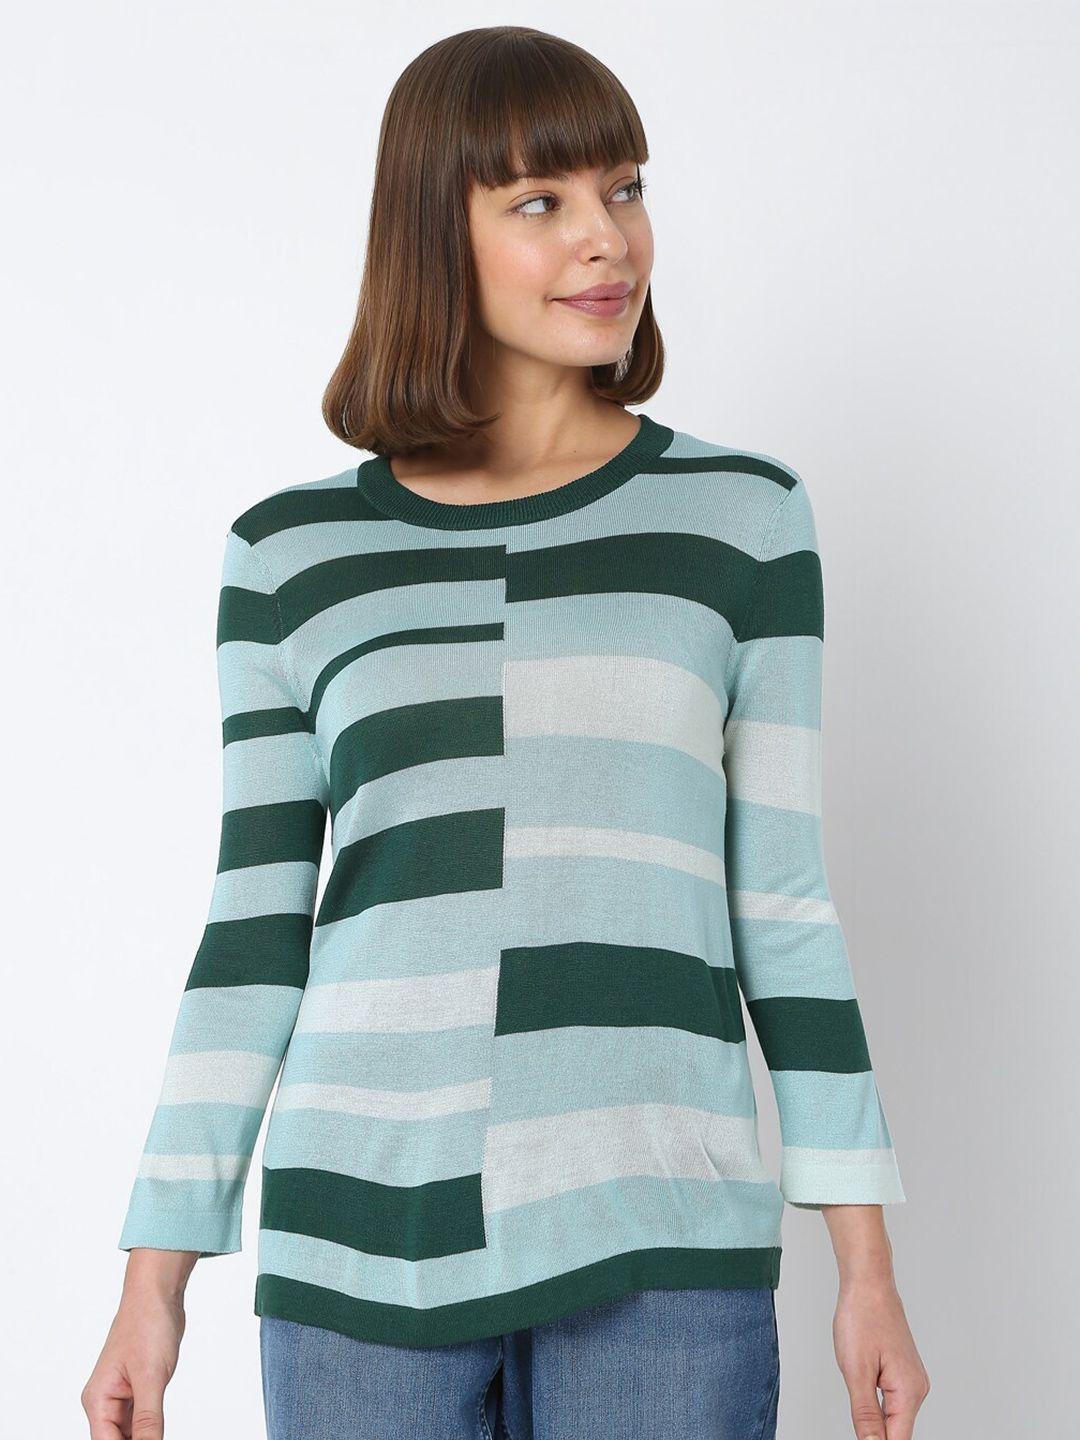 vero-moda-women-green-&-blue-striped-sweater